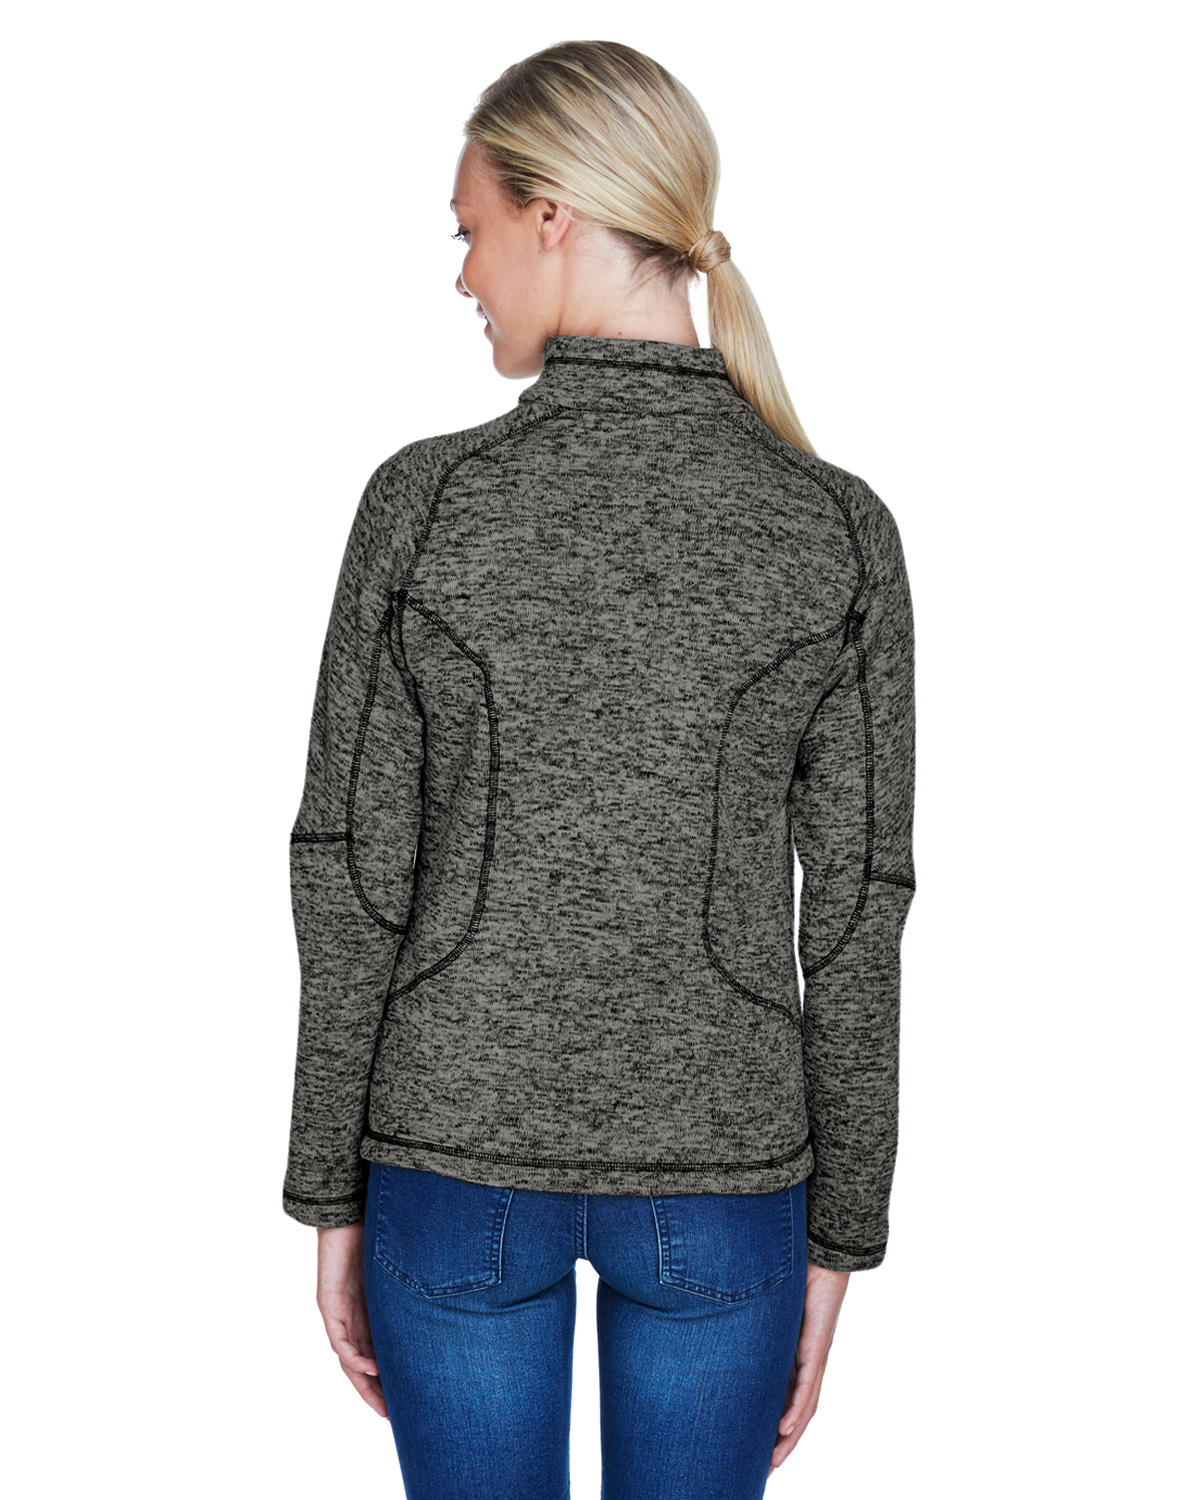 The Ash City - North End Ladies' Peak Sweater Fleece Jacket - HTHR CHRCL 745 - S - image 2 of 2